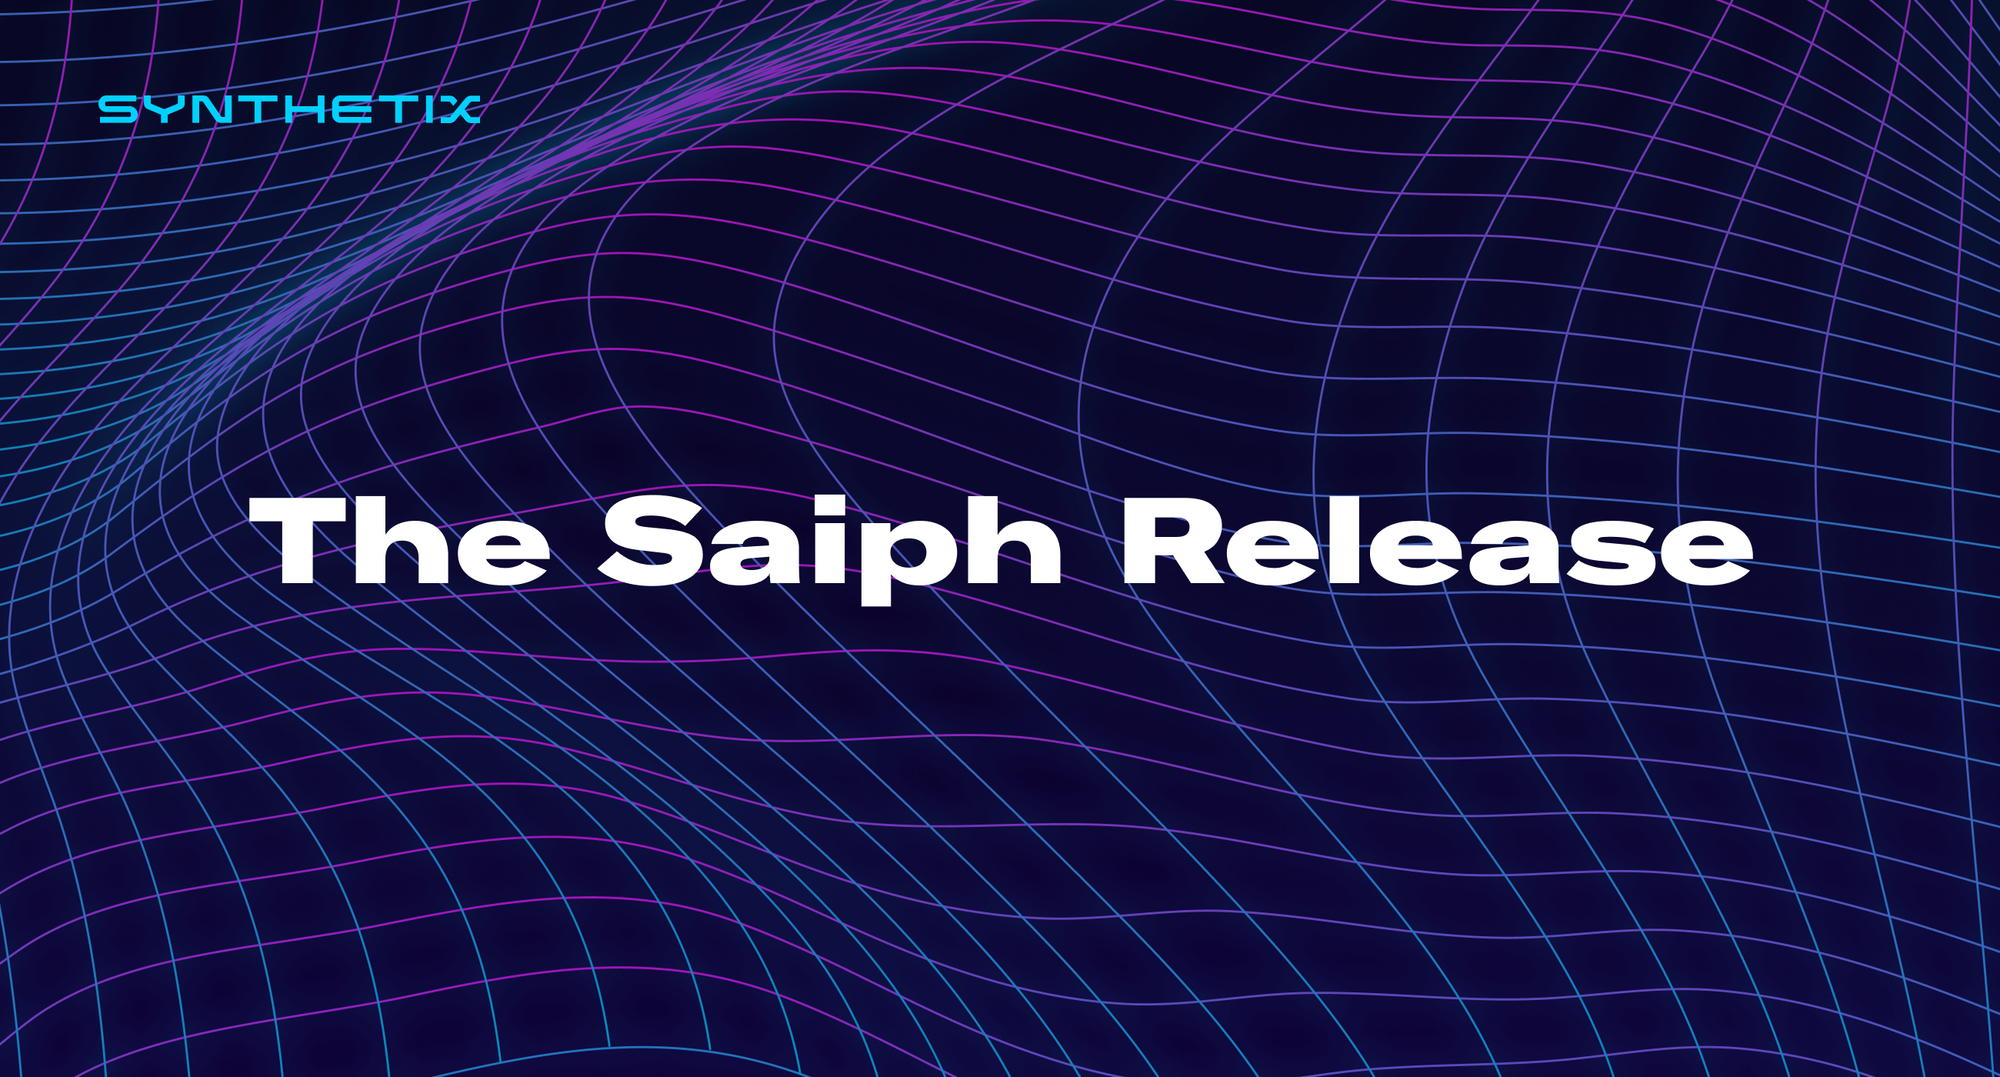 The Saiph Release